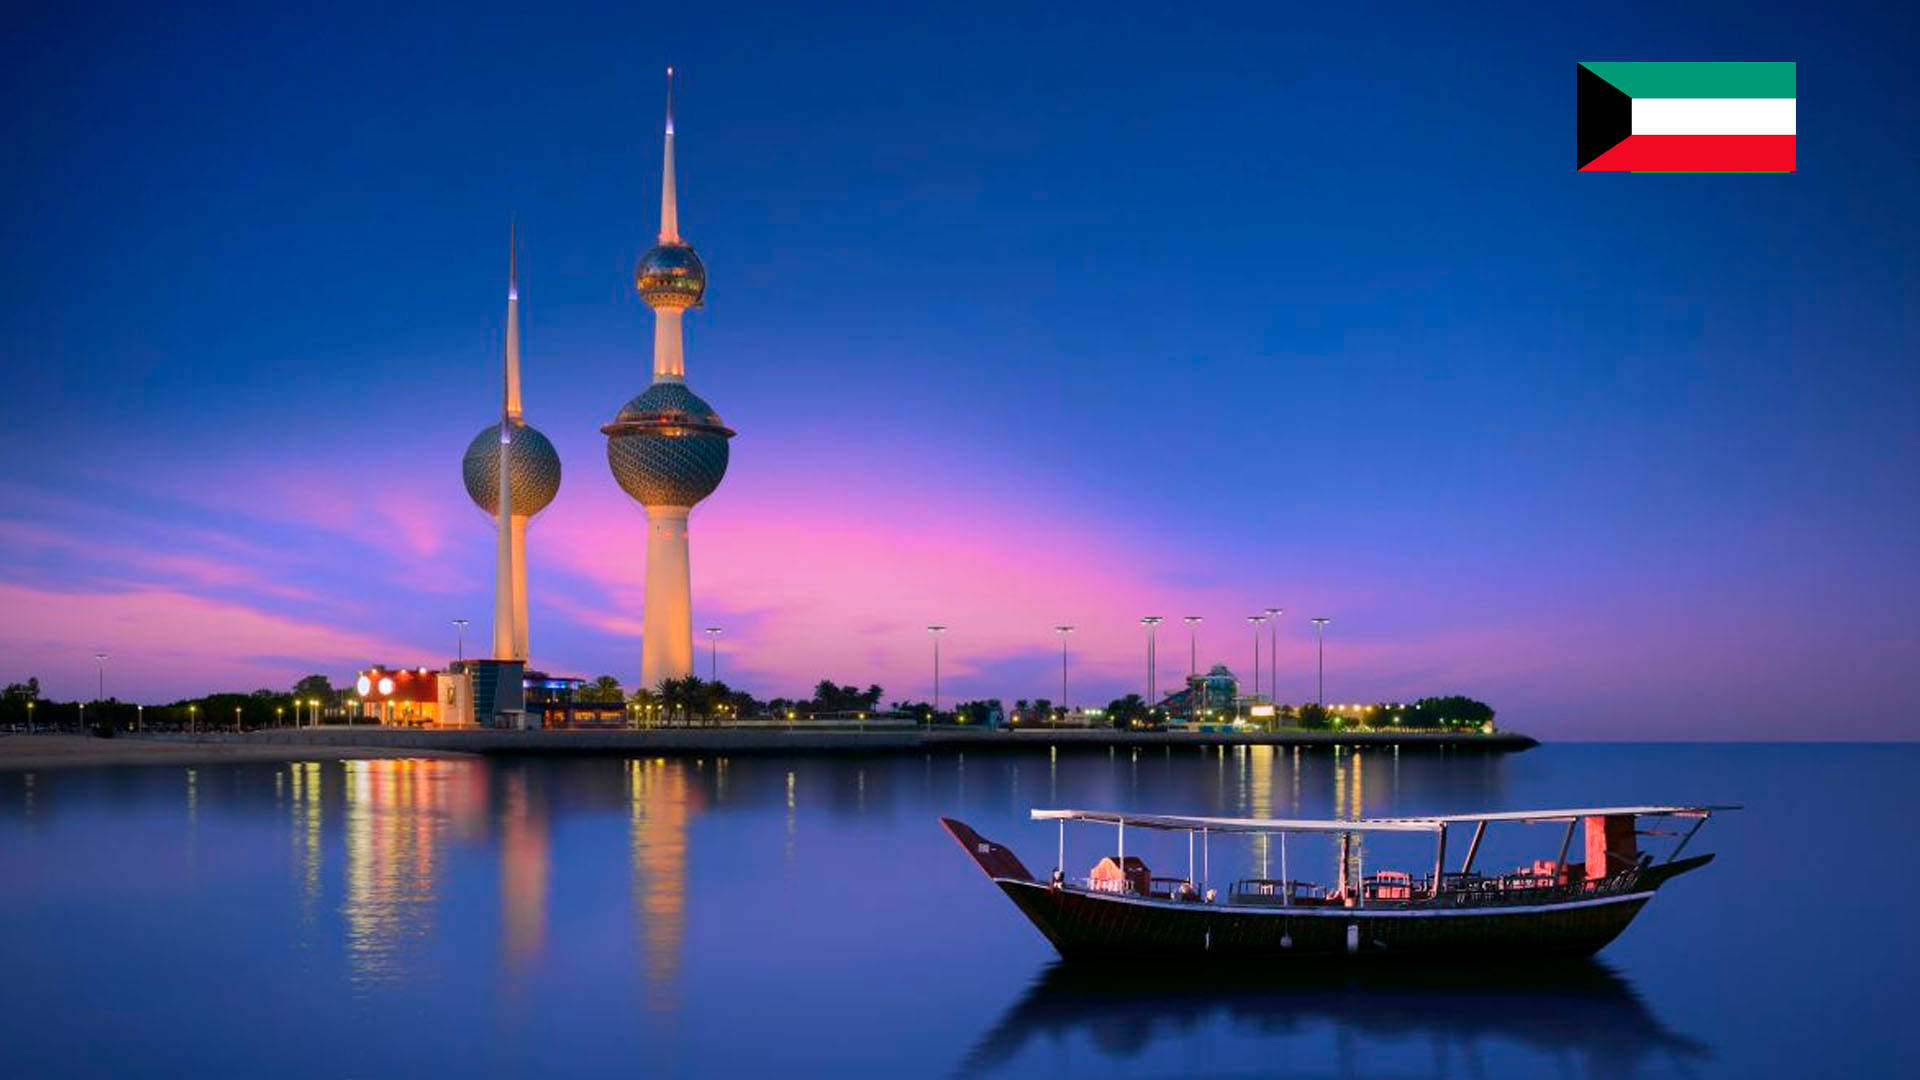 Kuwait Towers - Iconic Landmark Against the Stunning Seaside Backdrop Wallpaper